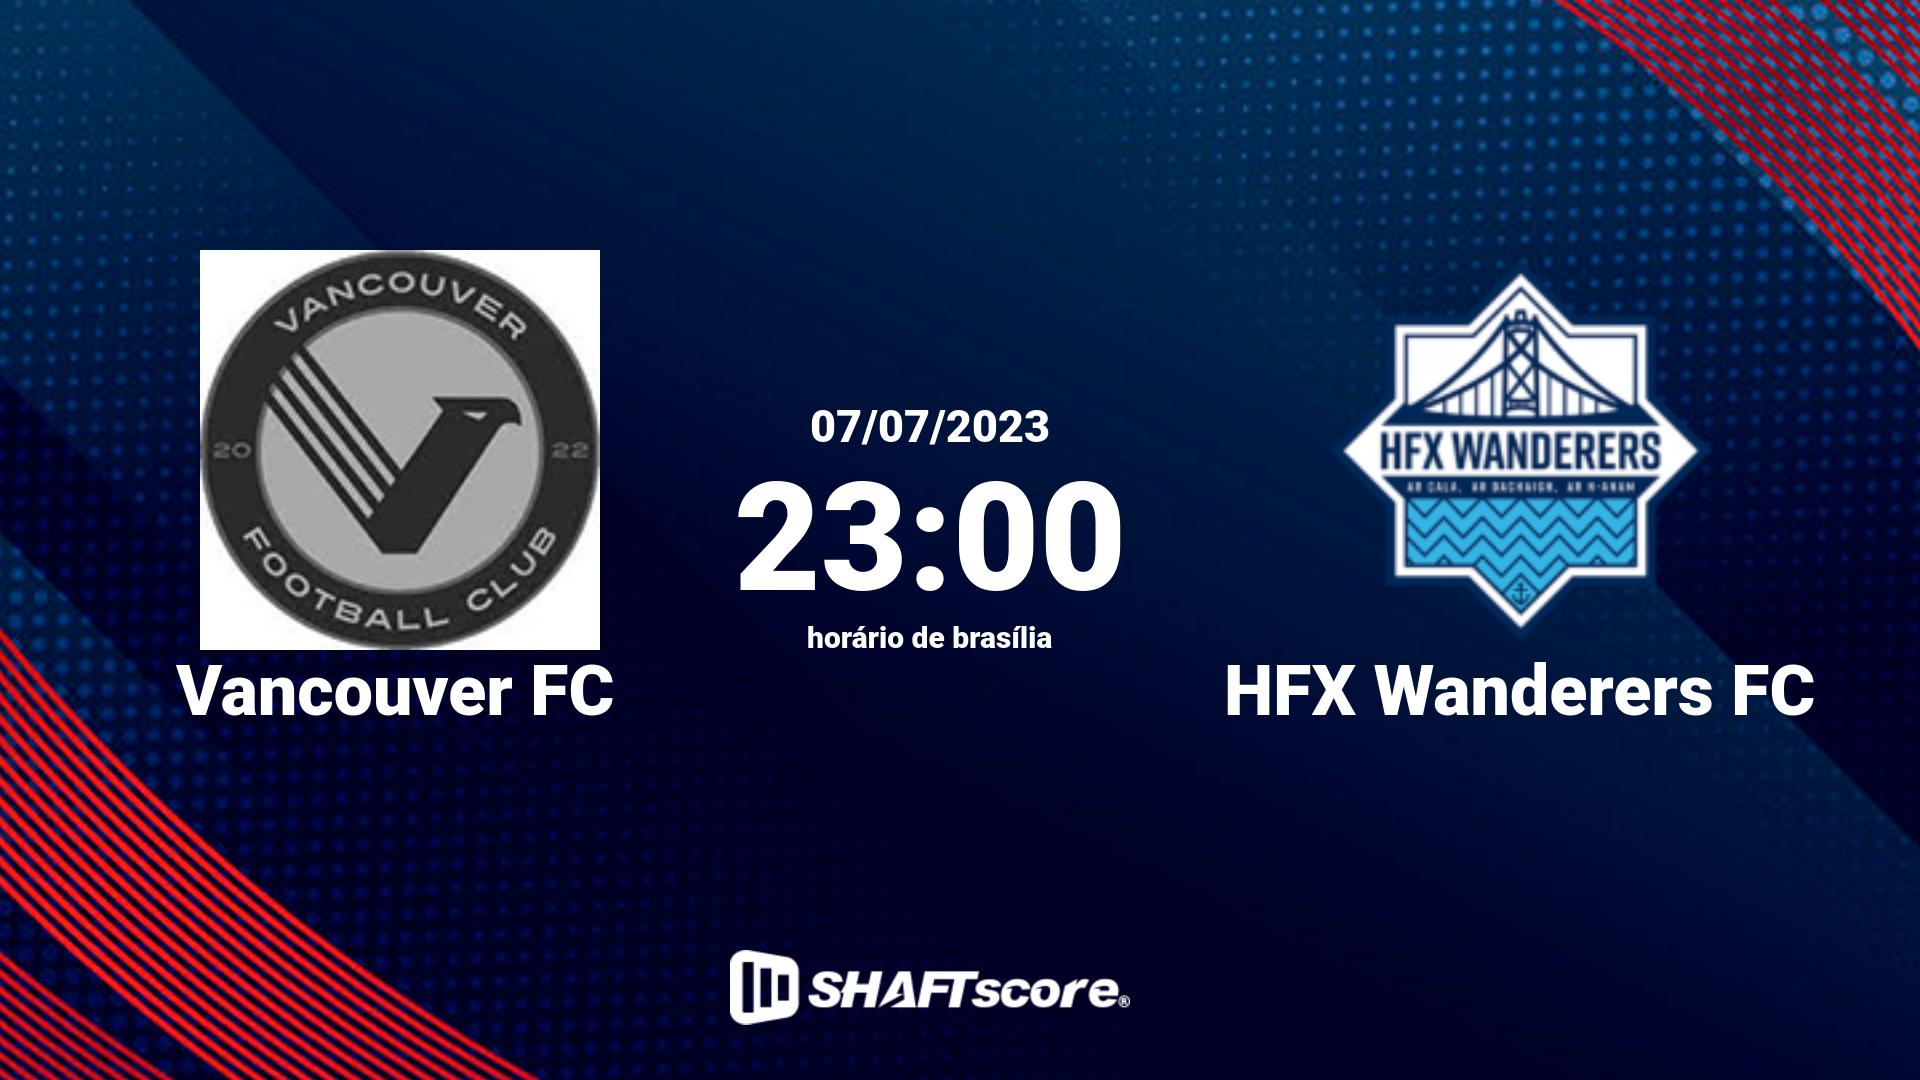 Estatísticas do jogo Vancouver FC vs HFX Wanderers FC 07.07 23:00